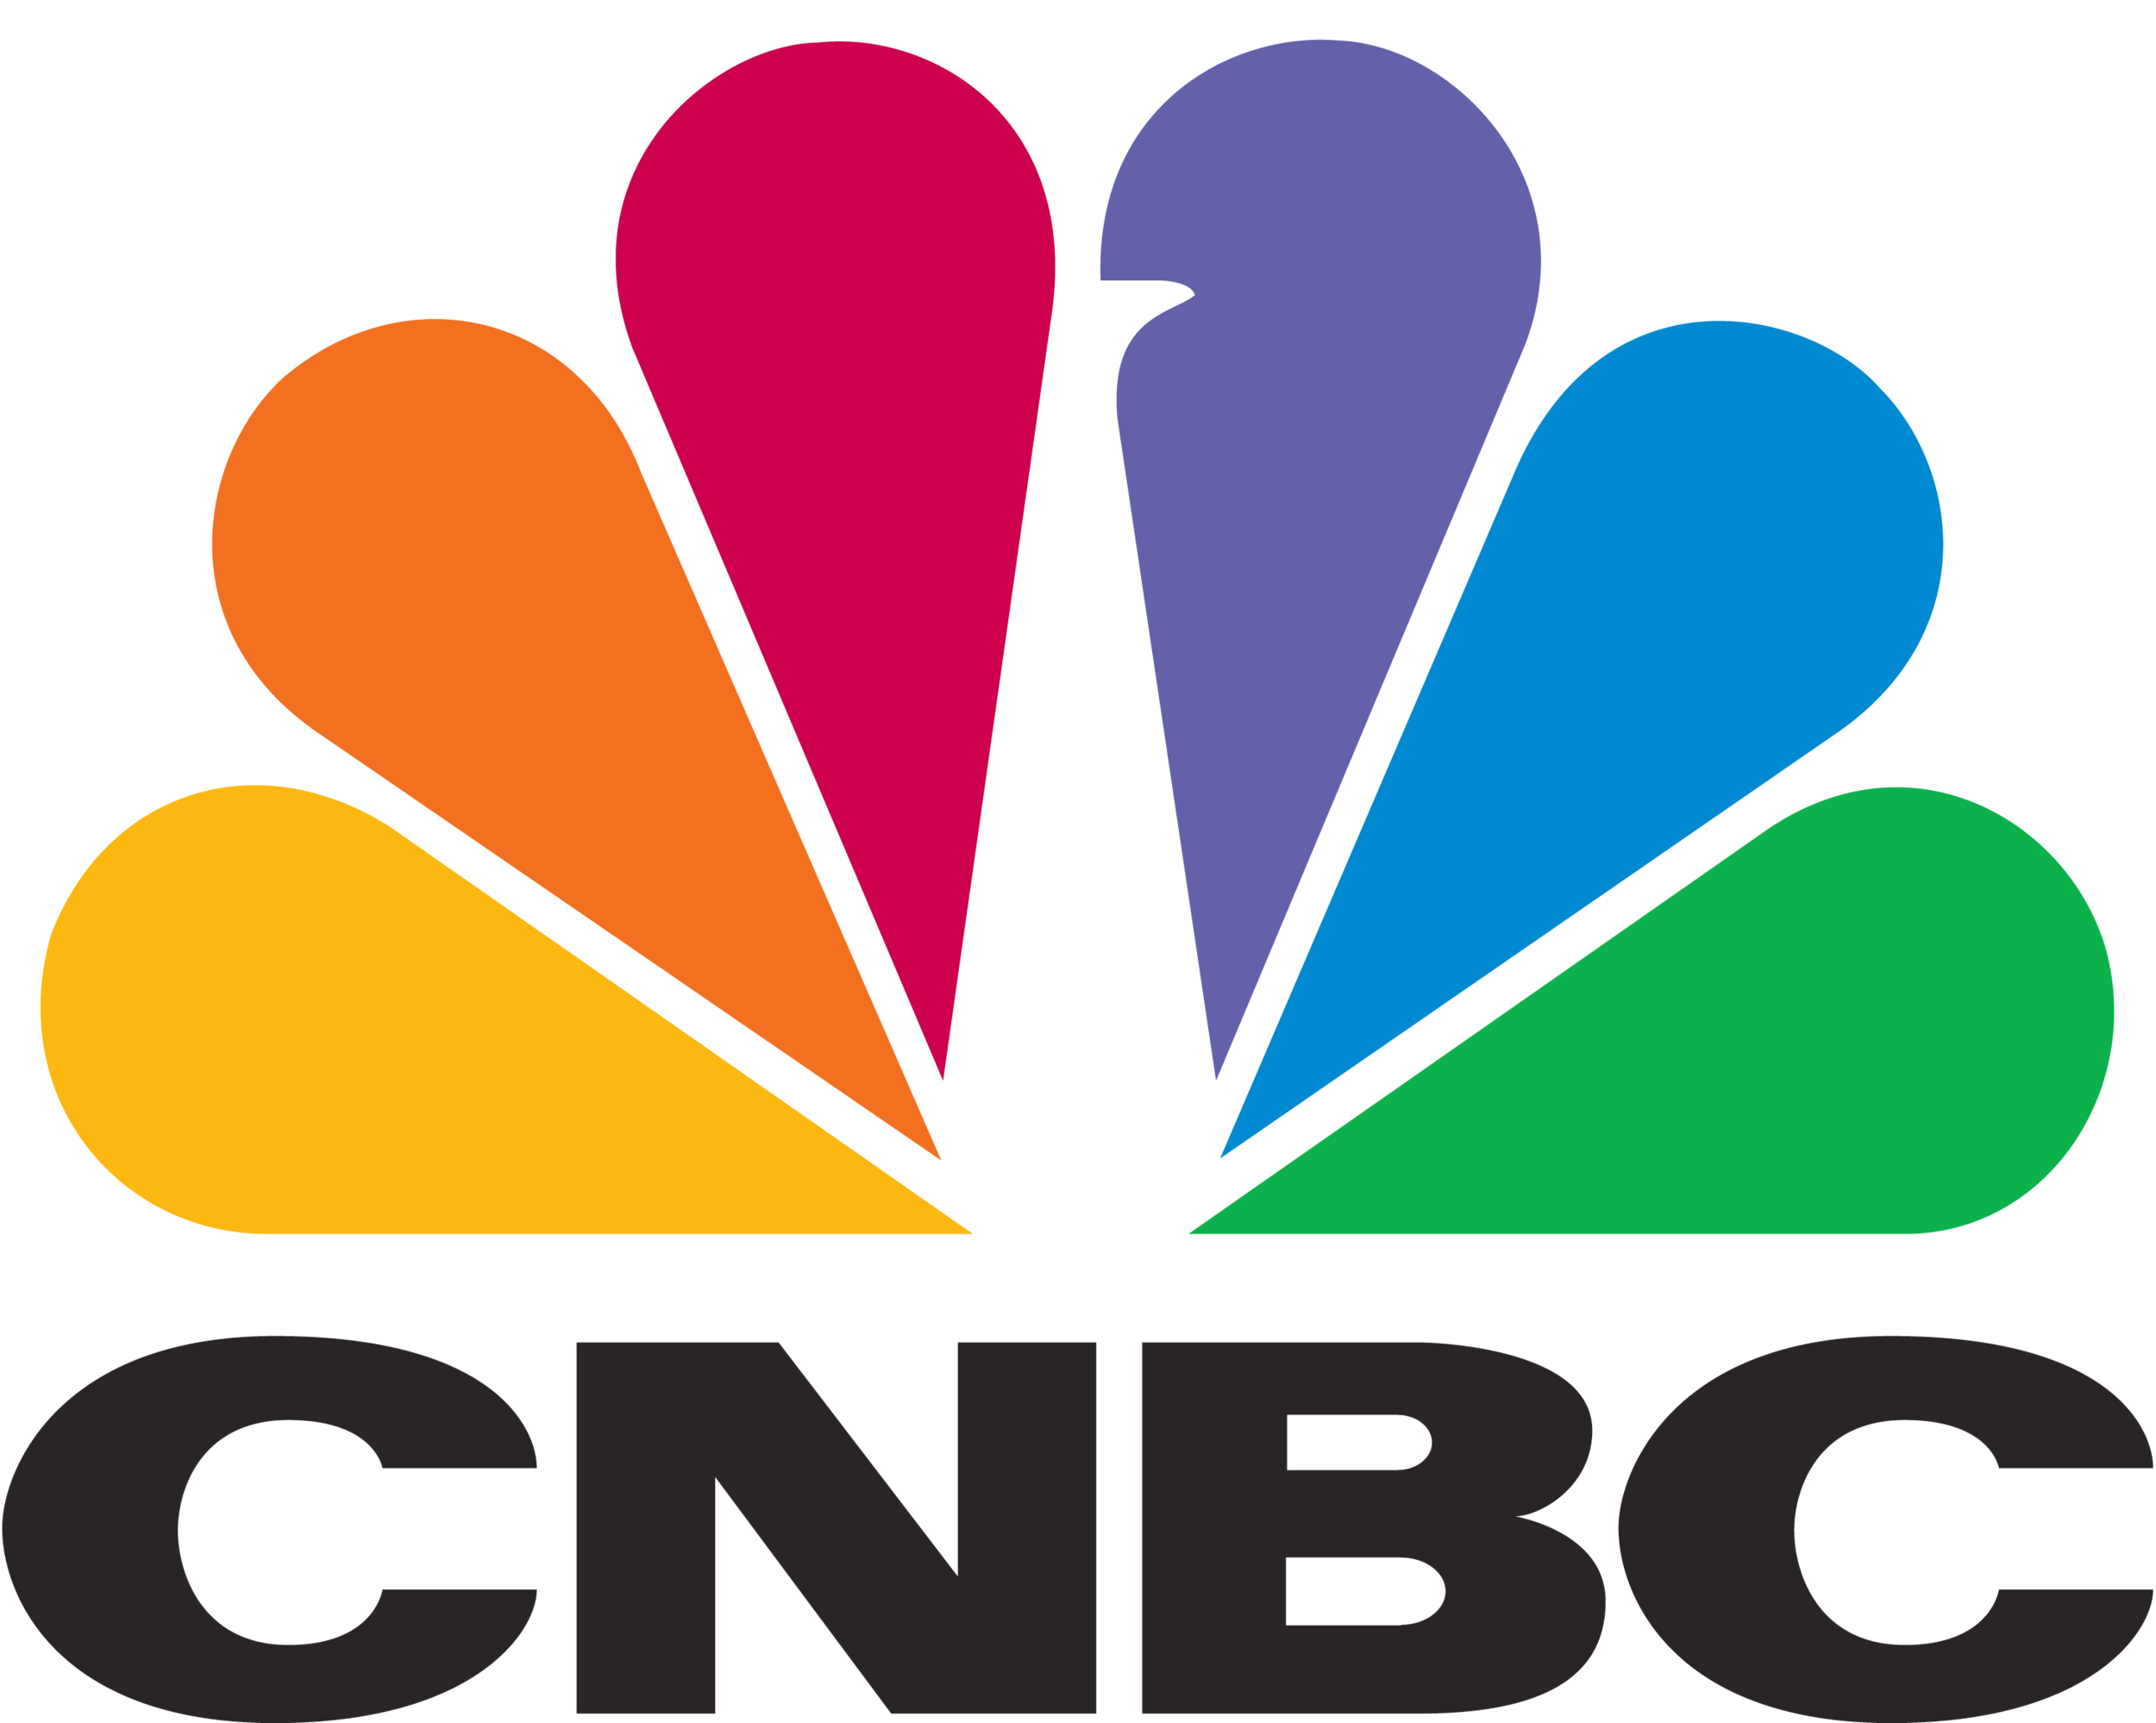 CNBC_logo.png